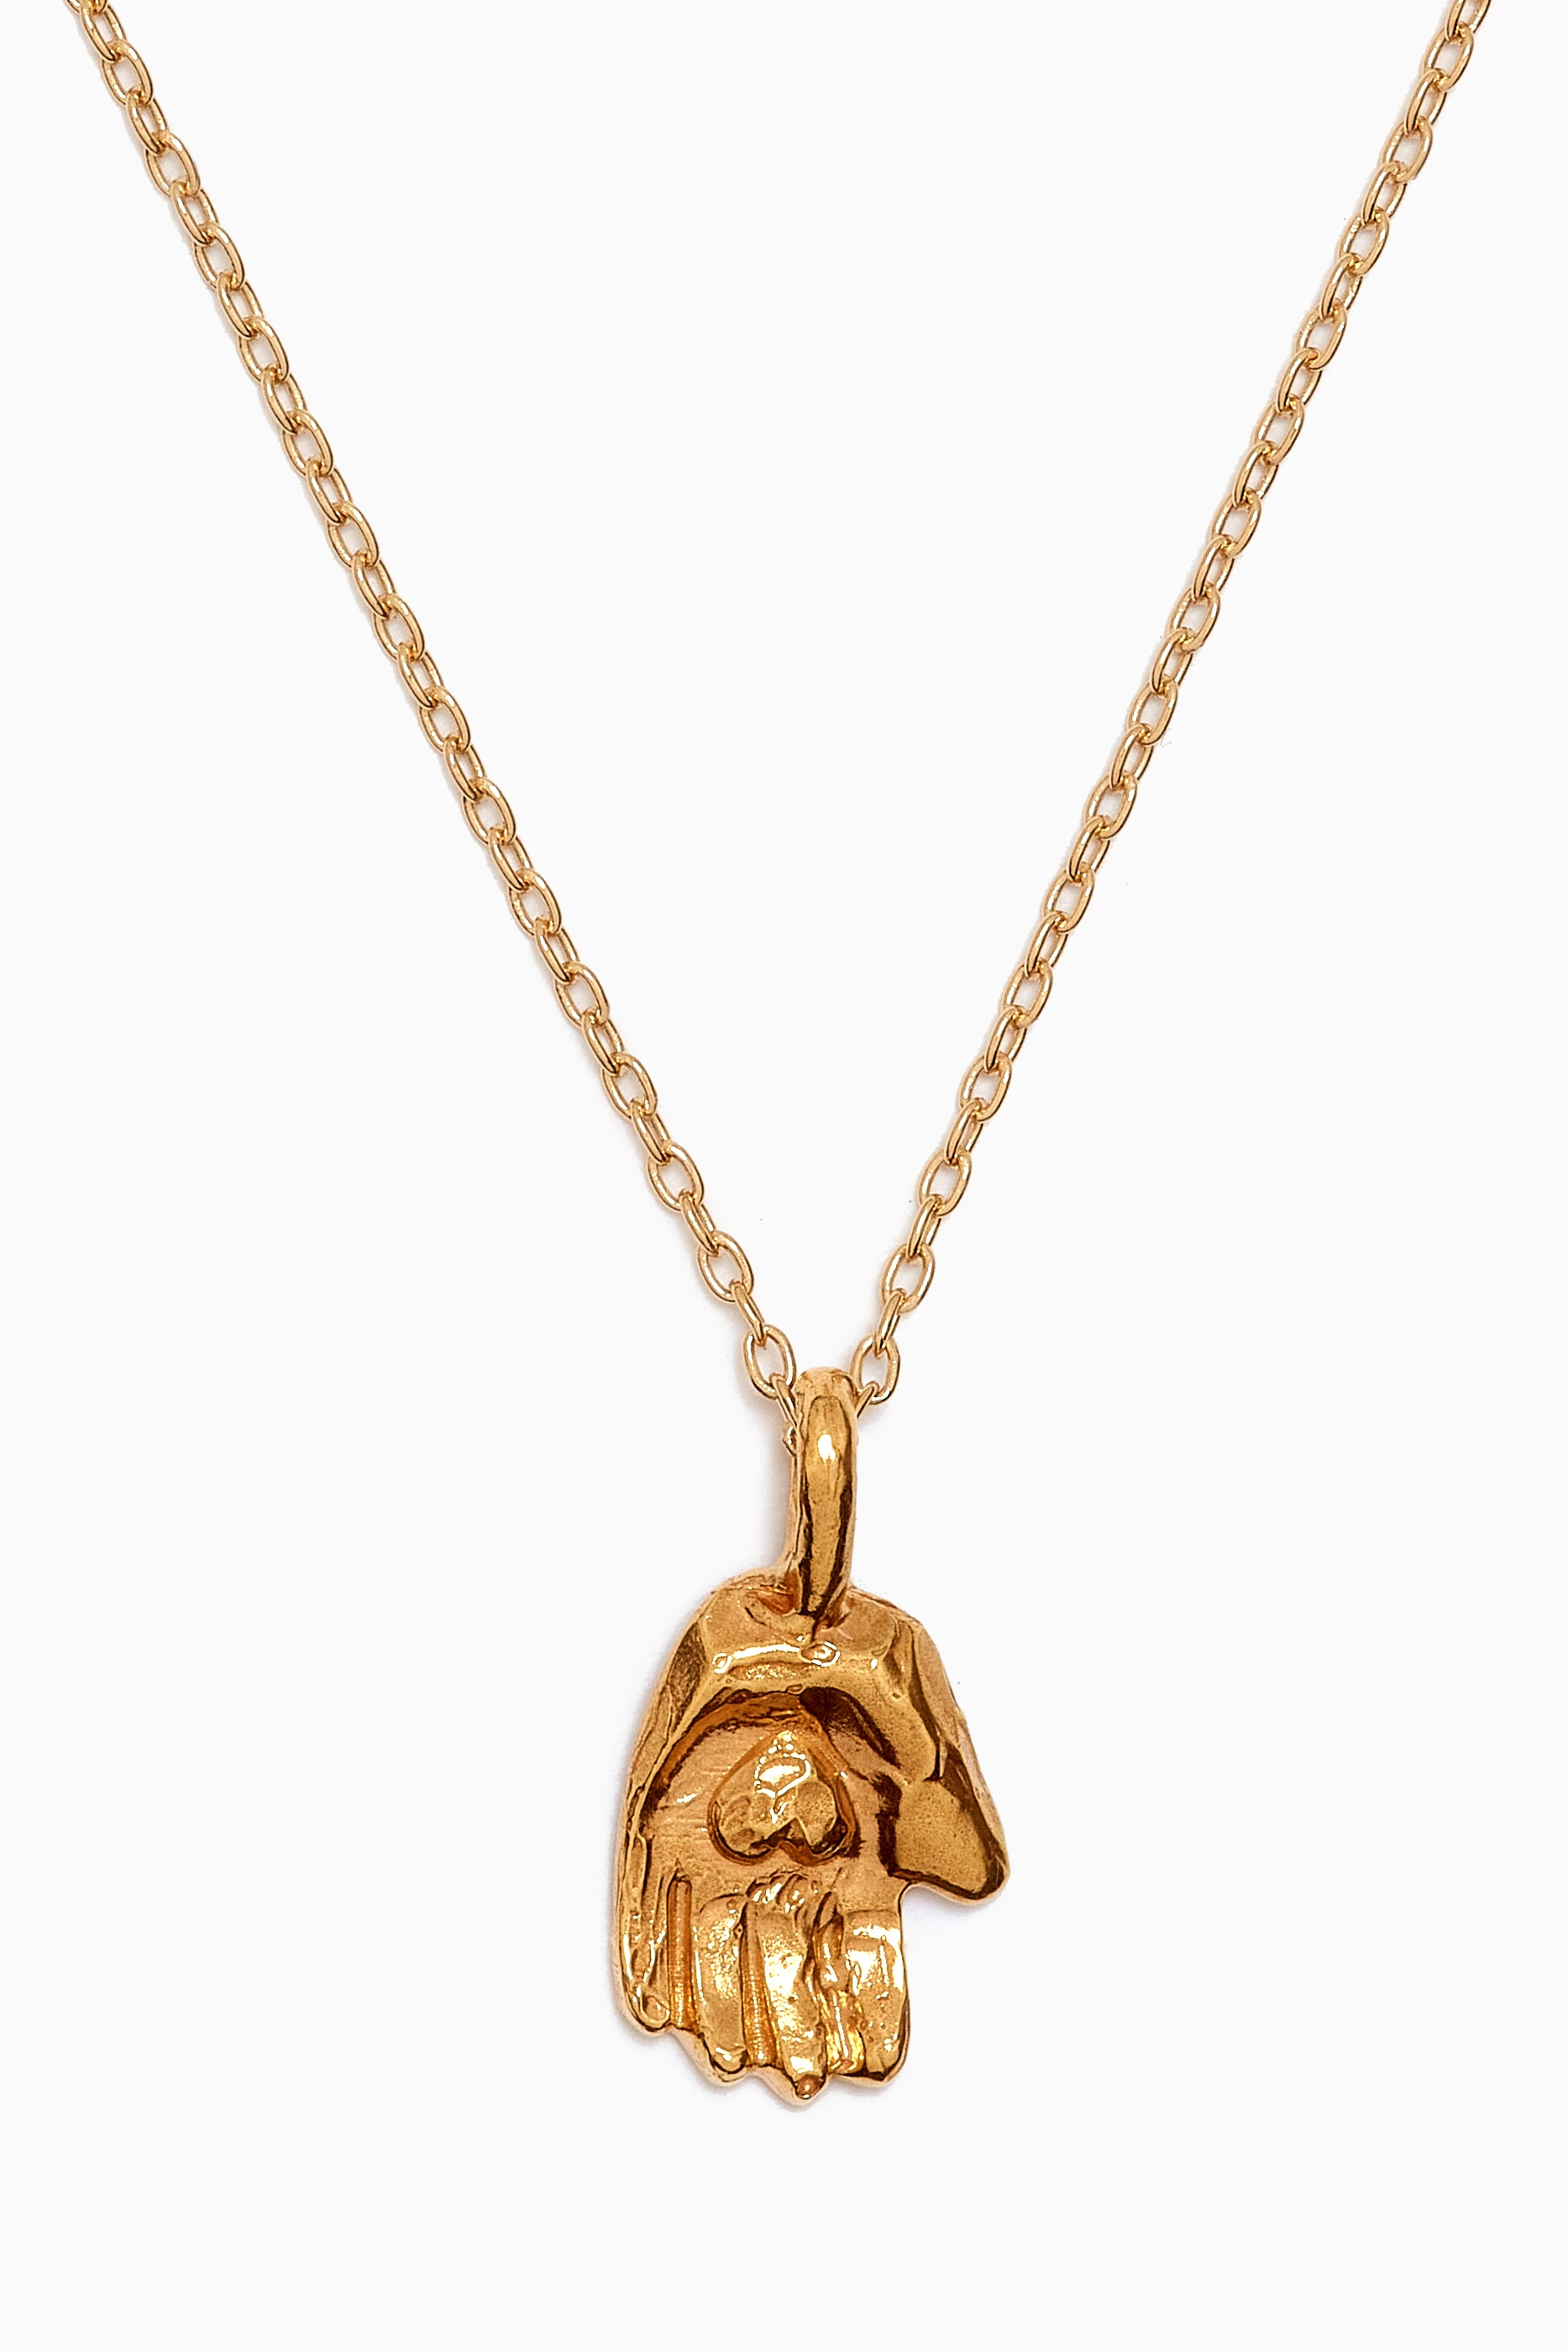 Alighieri 24kt Gold Necklace Hotsell | website.jkuat.ac.ke